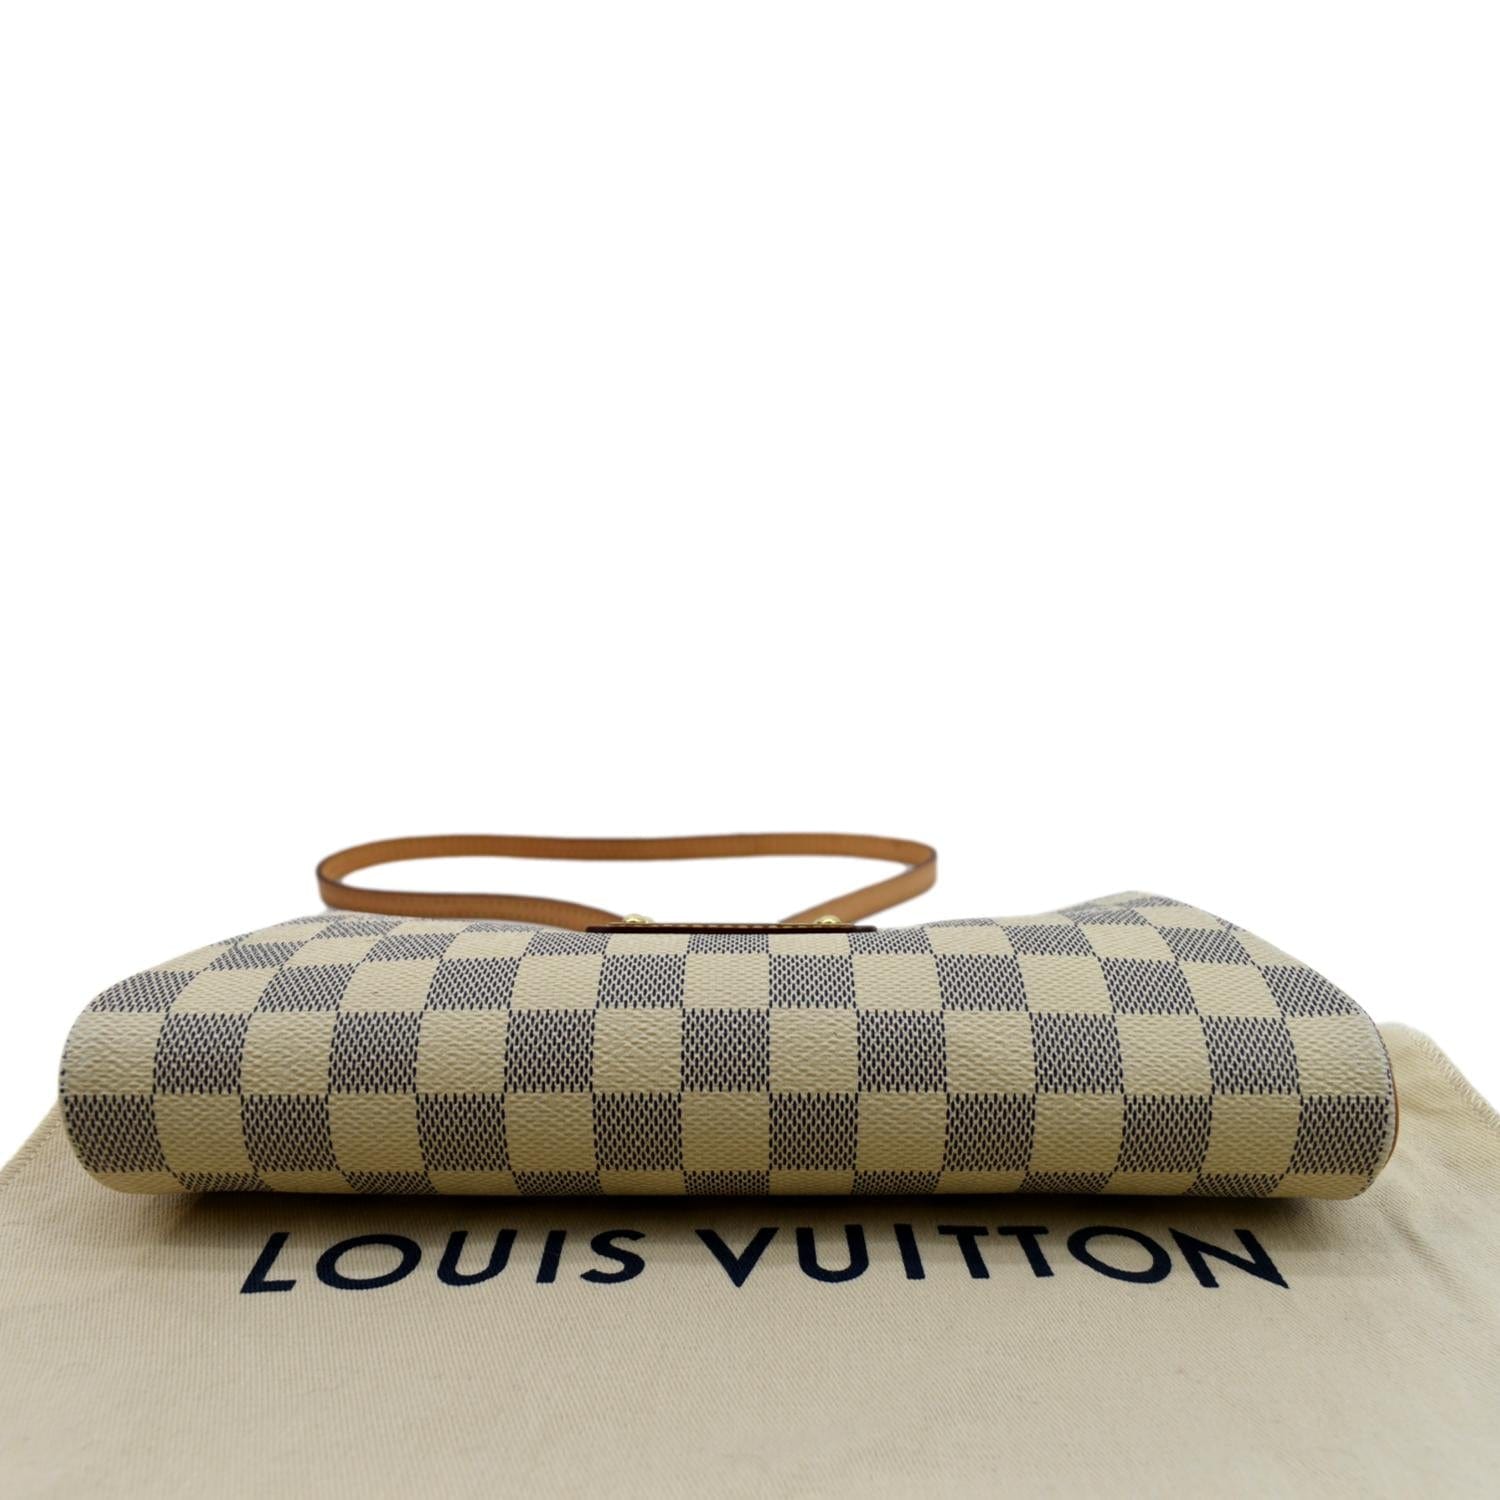 sold‼️  Lv clutch, Louis vuitton bag, Clutch